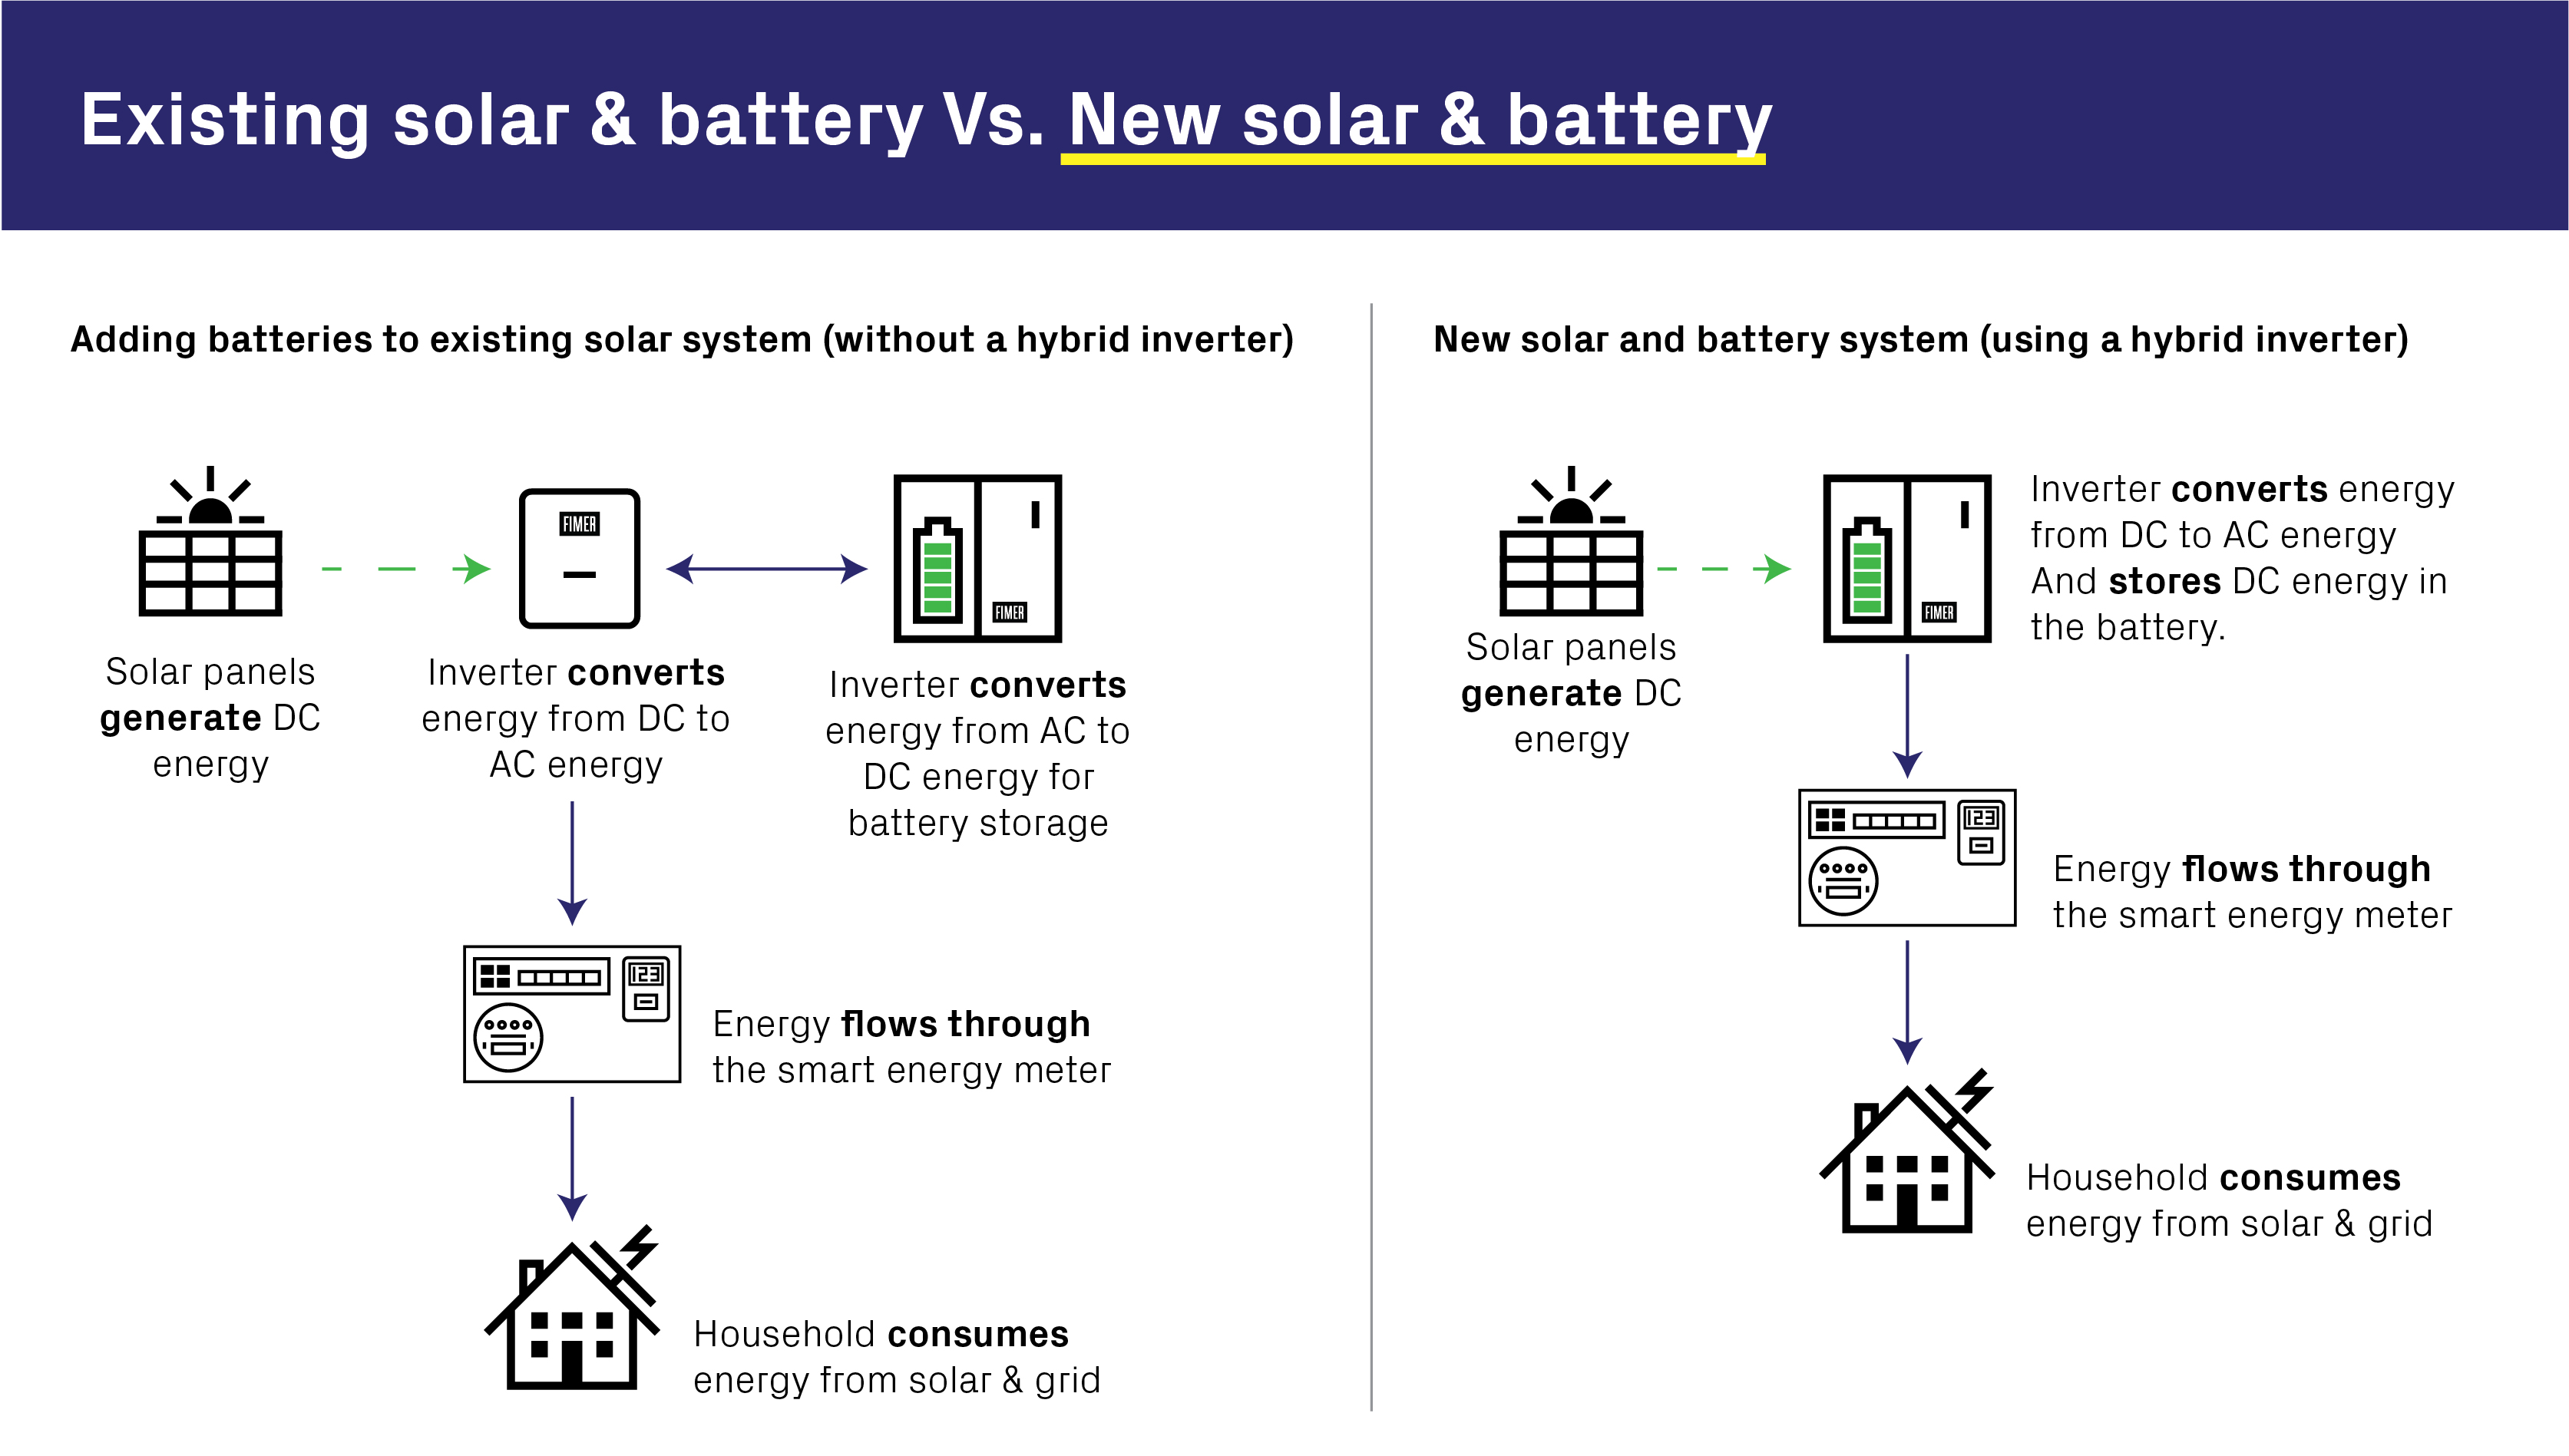 Existing Solar vs new solar & battery